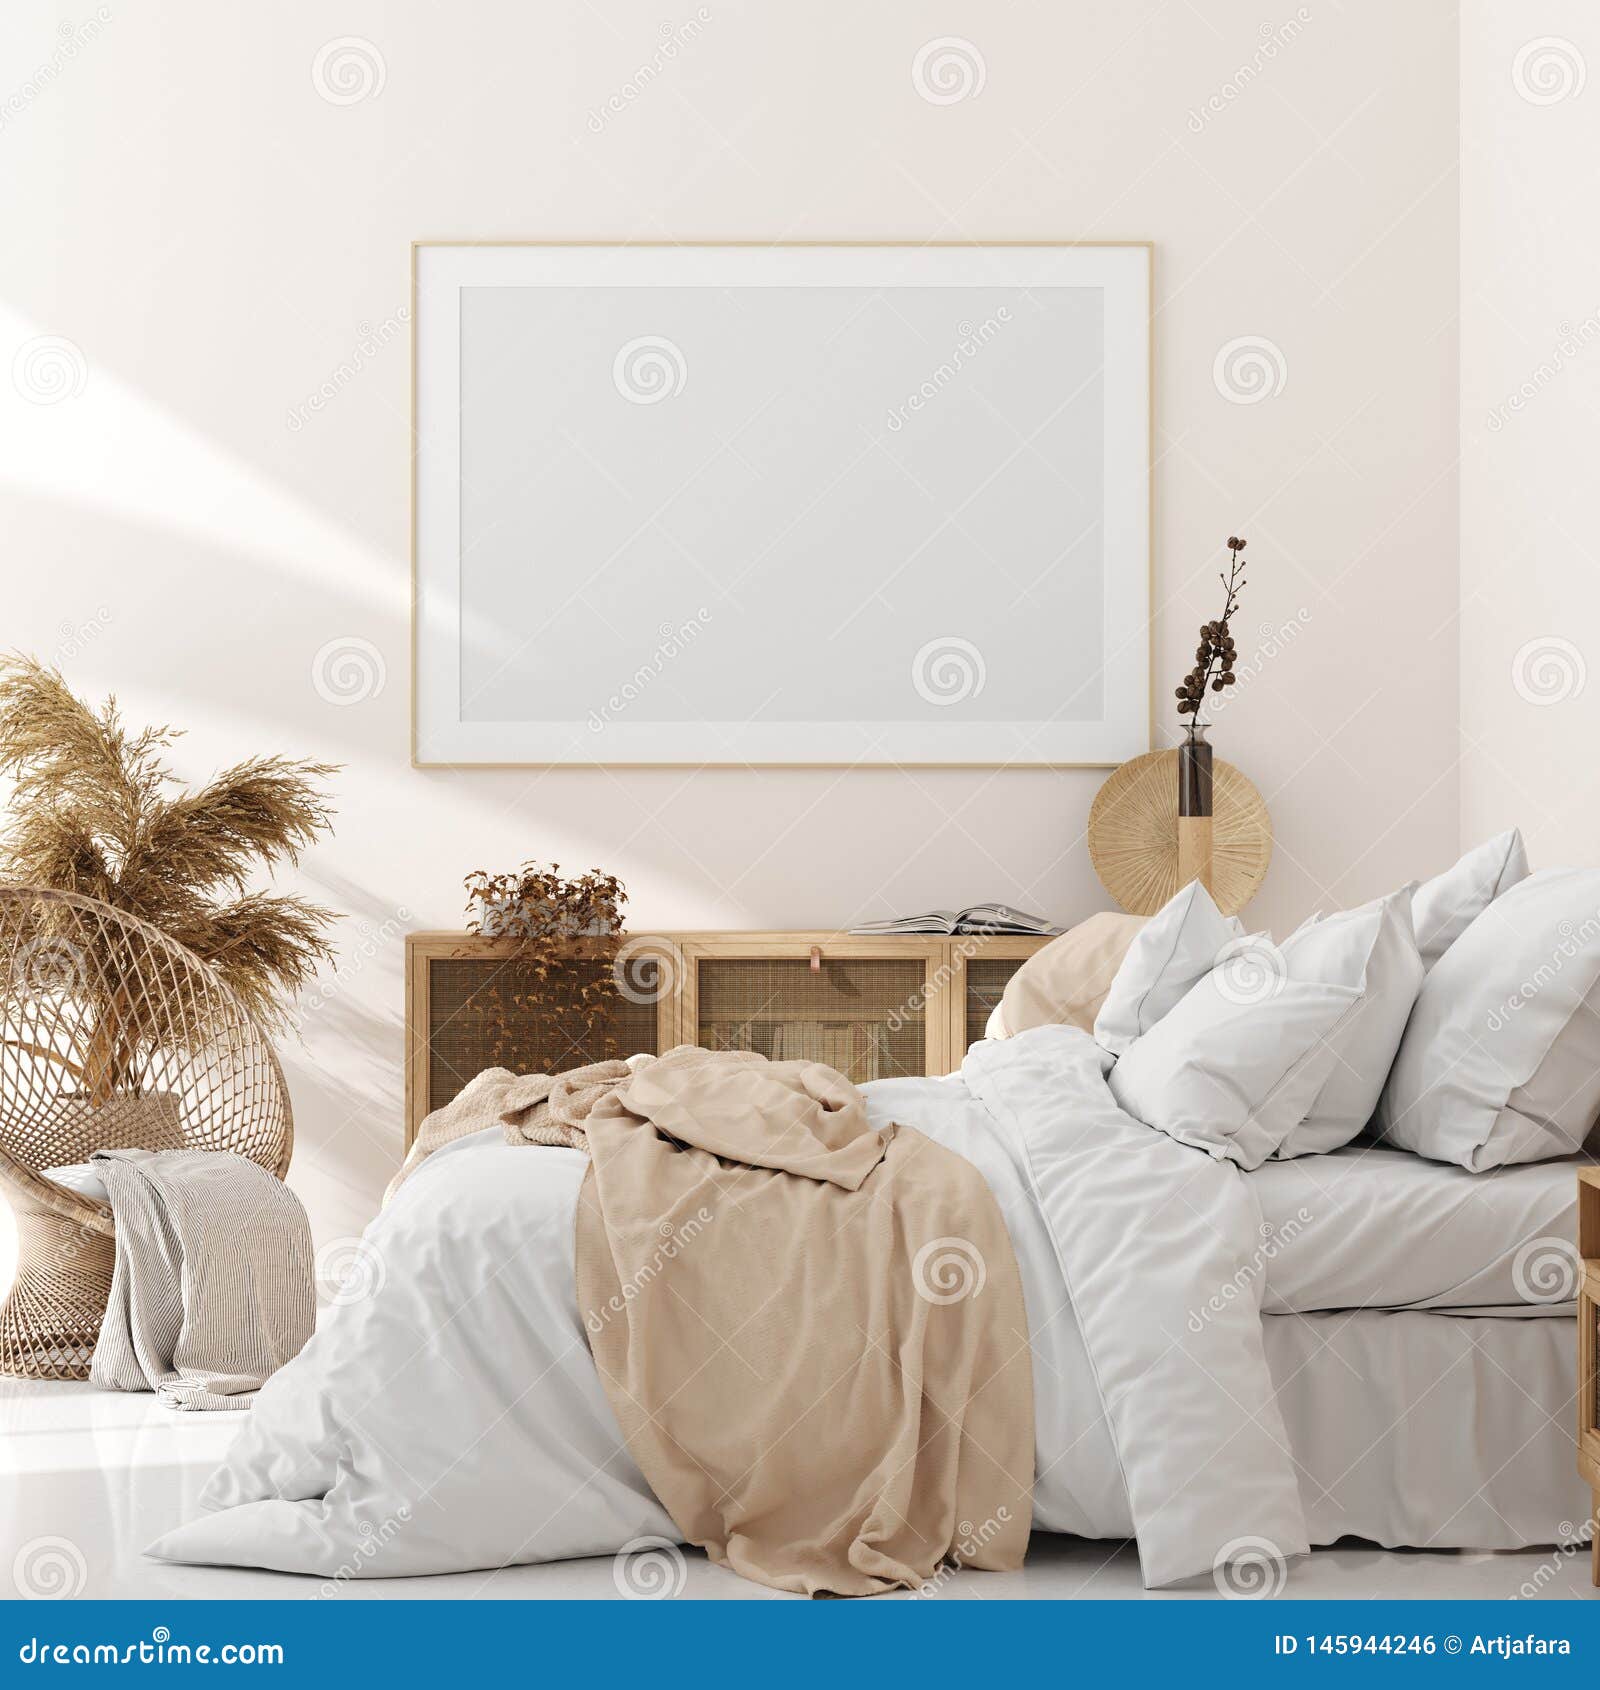 mock up frame in bedroom interior, beige room with natural wooden furniture, scandinavian style